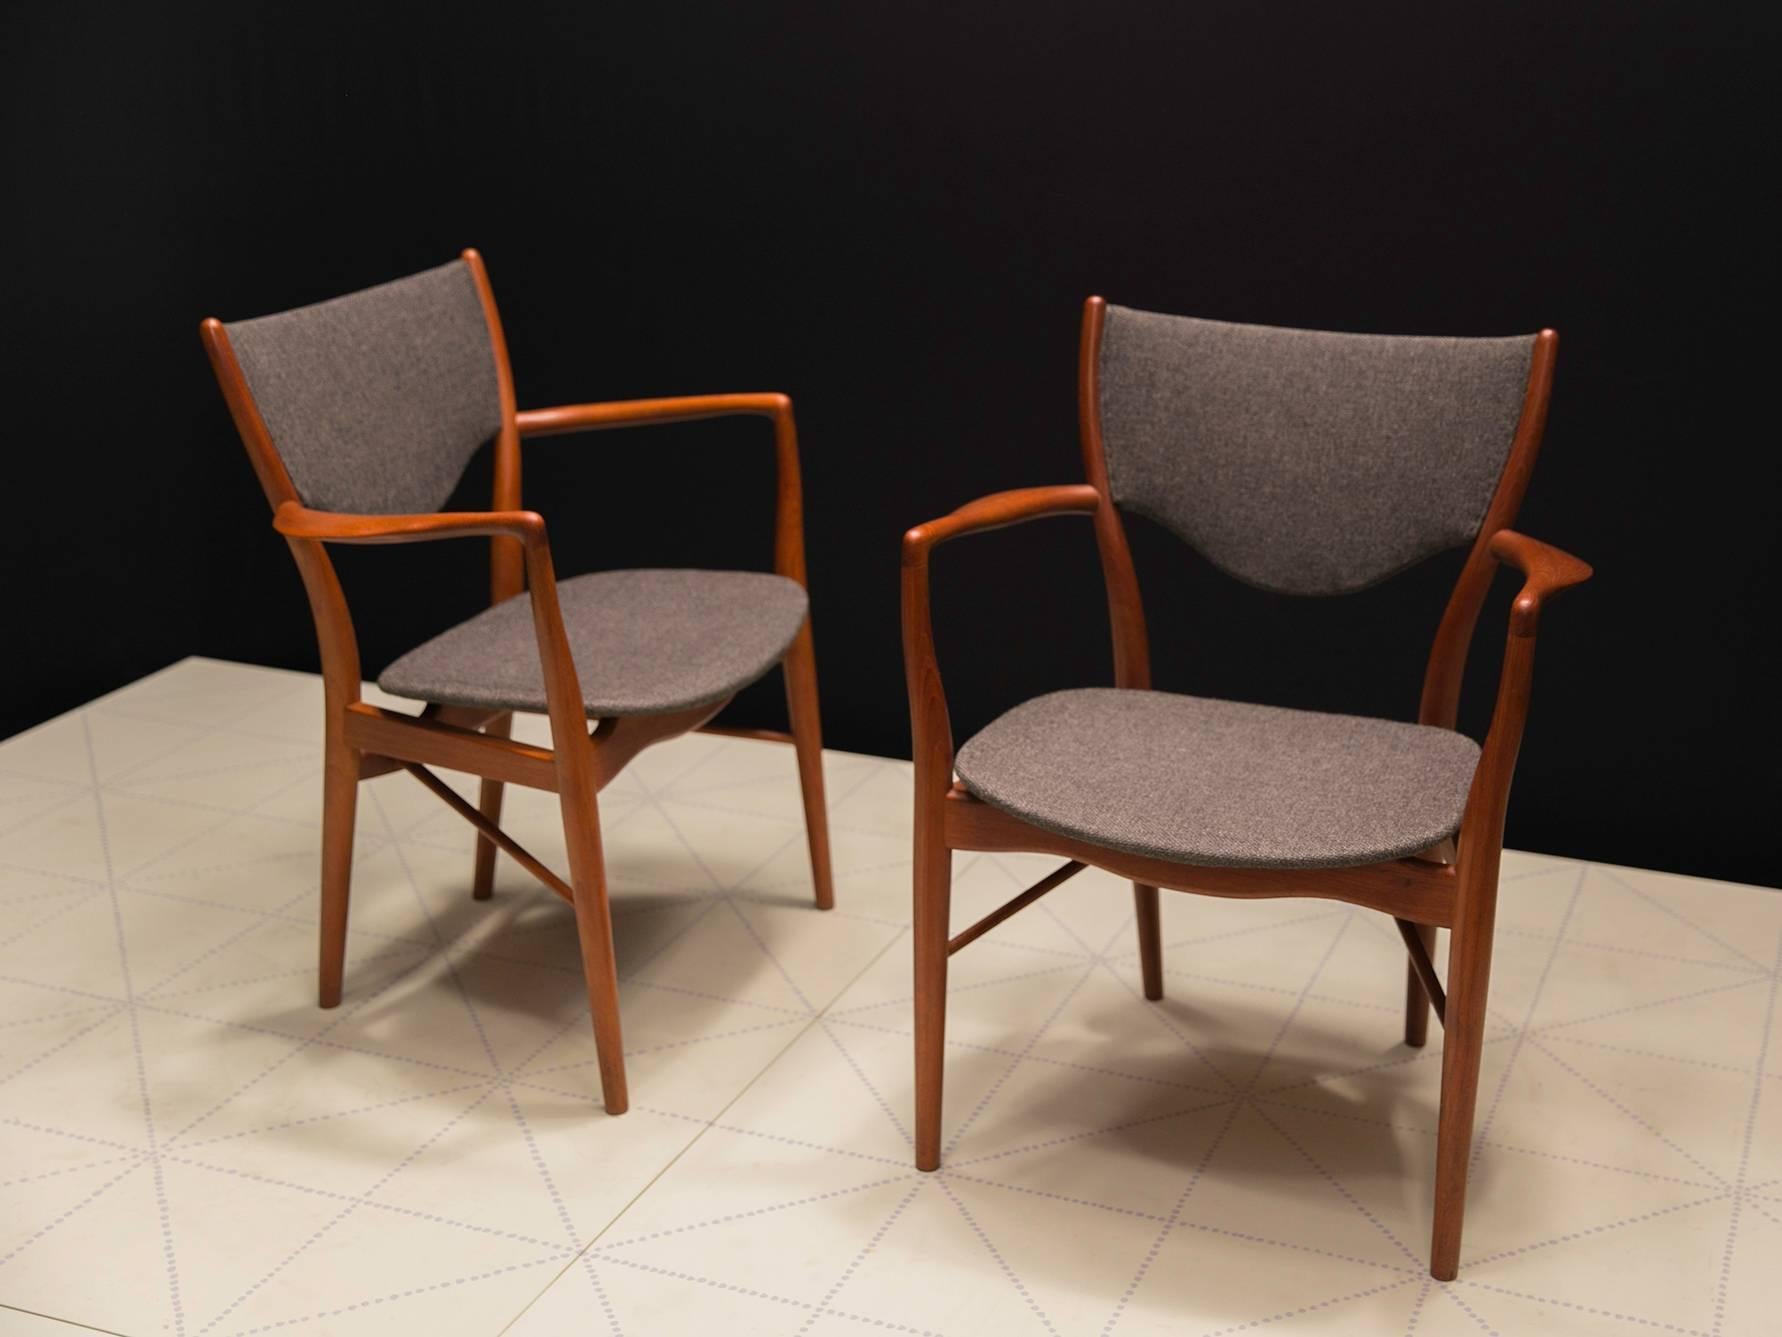 Scandinavian Modern Pair of Finn Juhl BO-46 Chairs in Teak and Original Charcoal Wool Seats For Sale